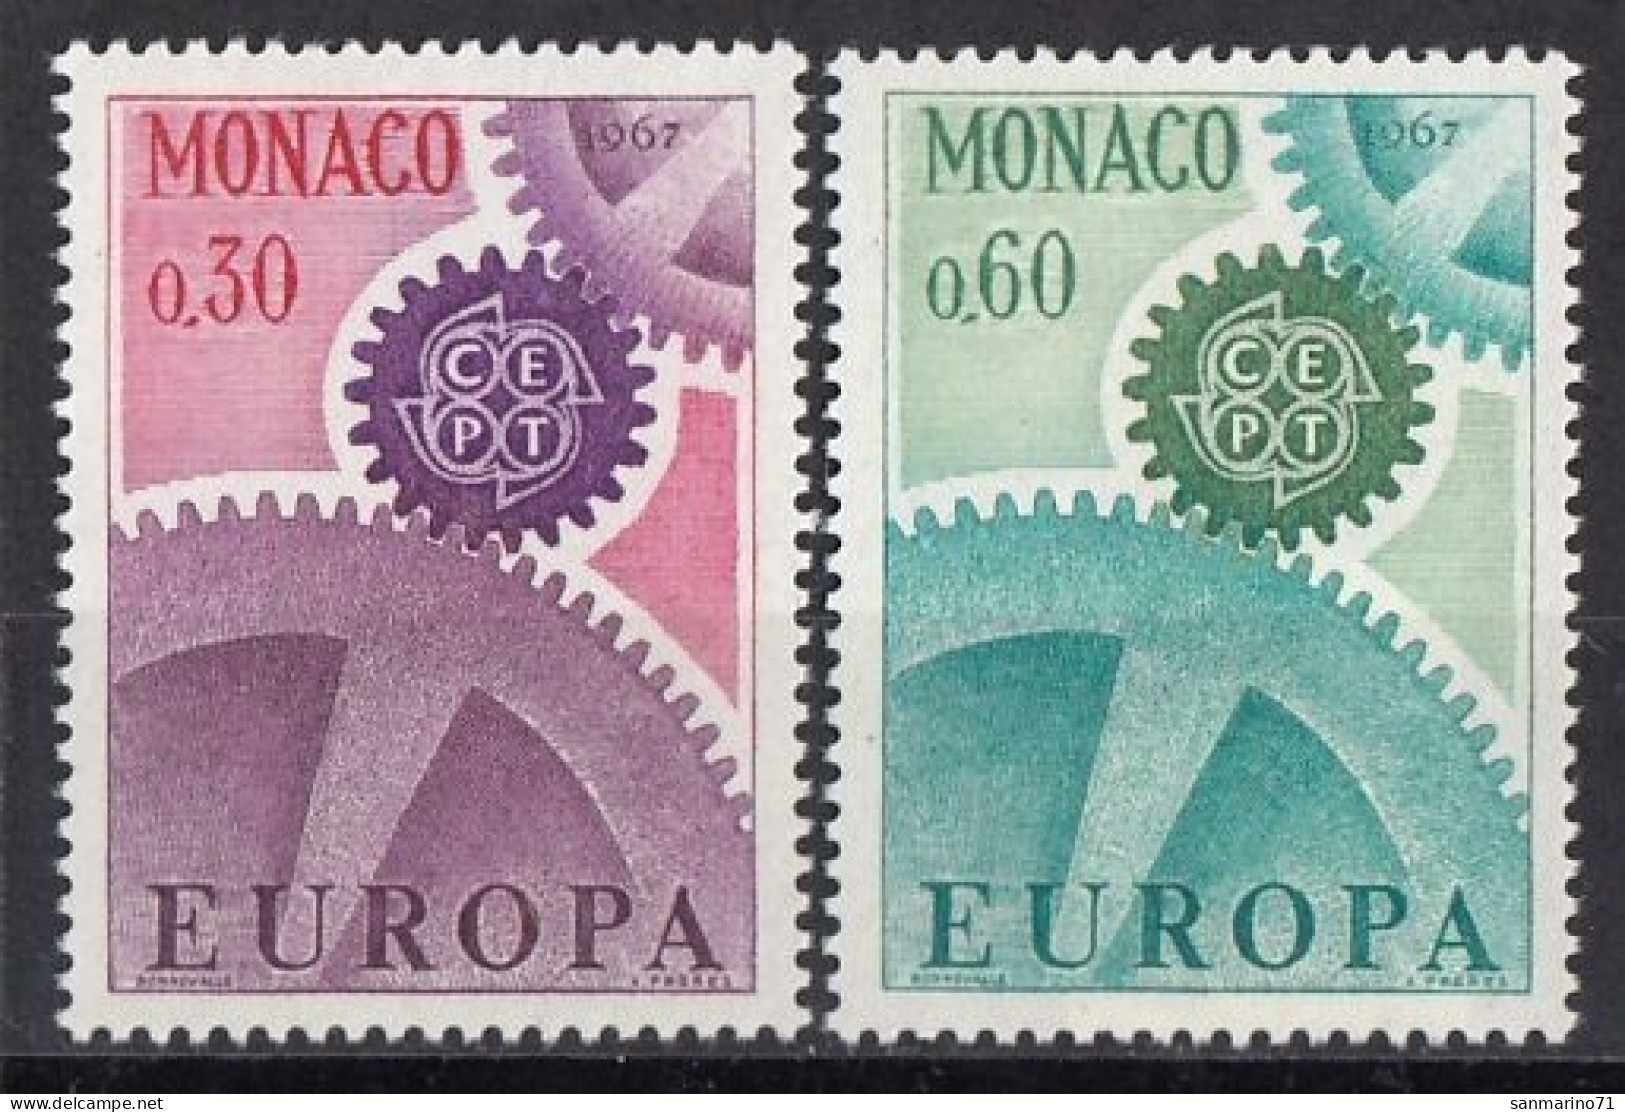 MONACO 870-871,unused - 1967